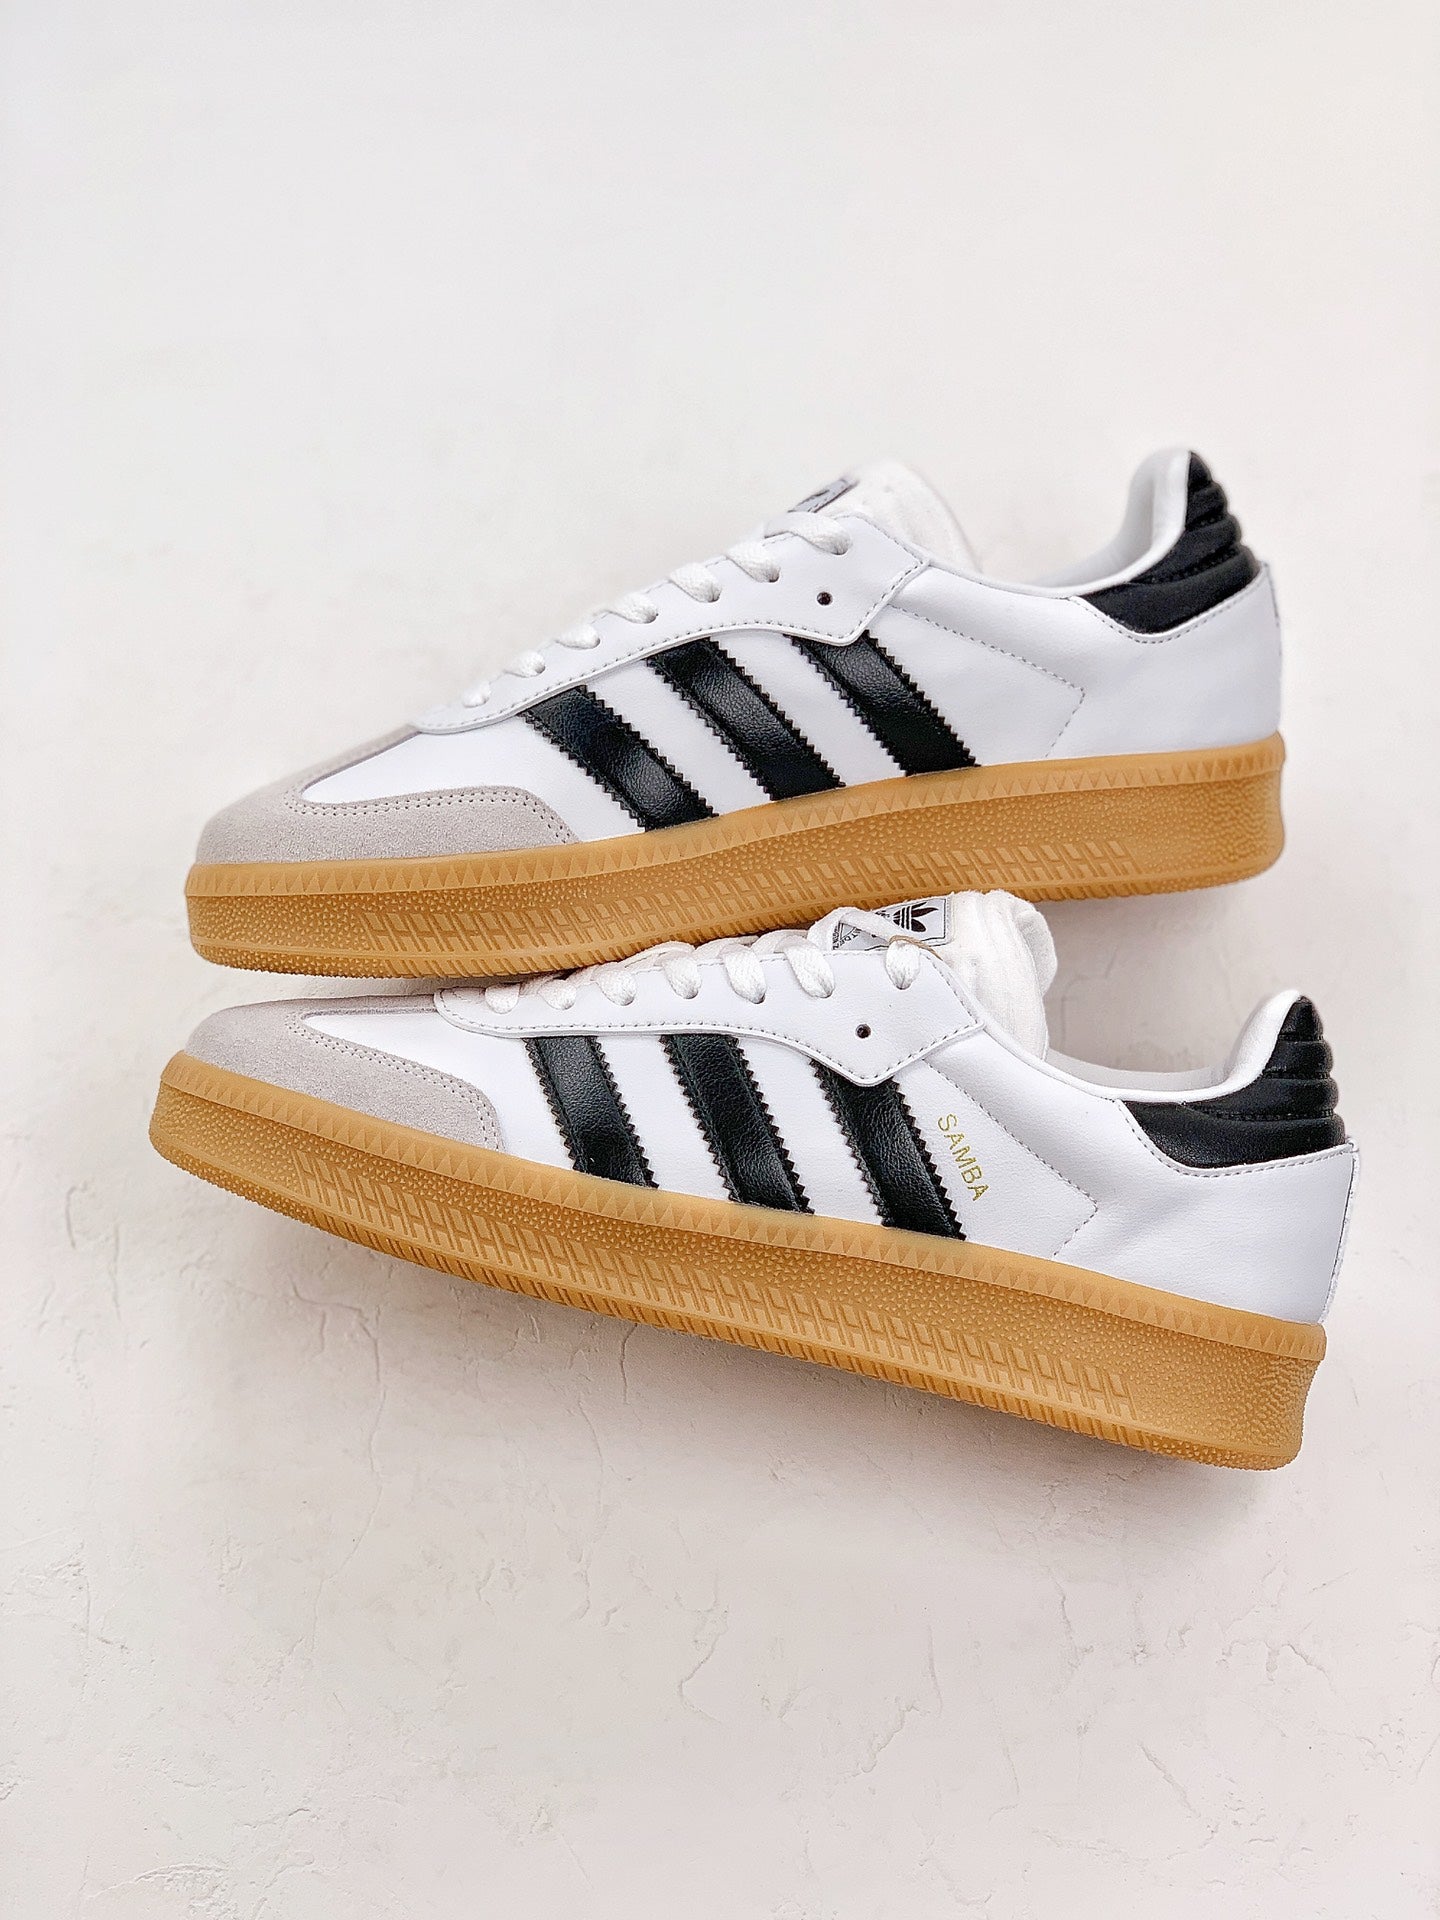 Adidas samba xl black and white shoes